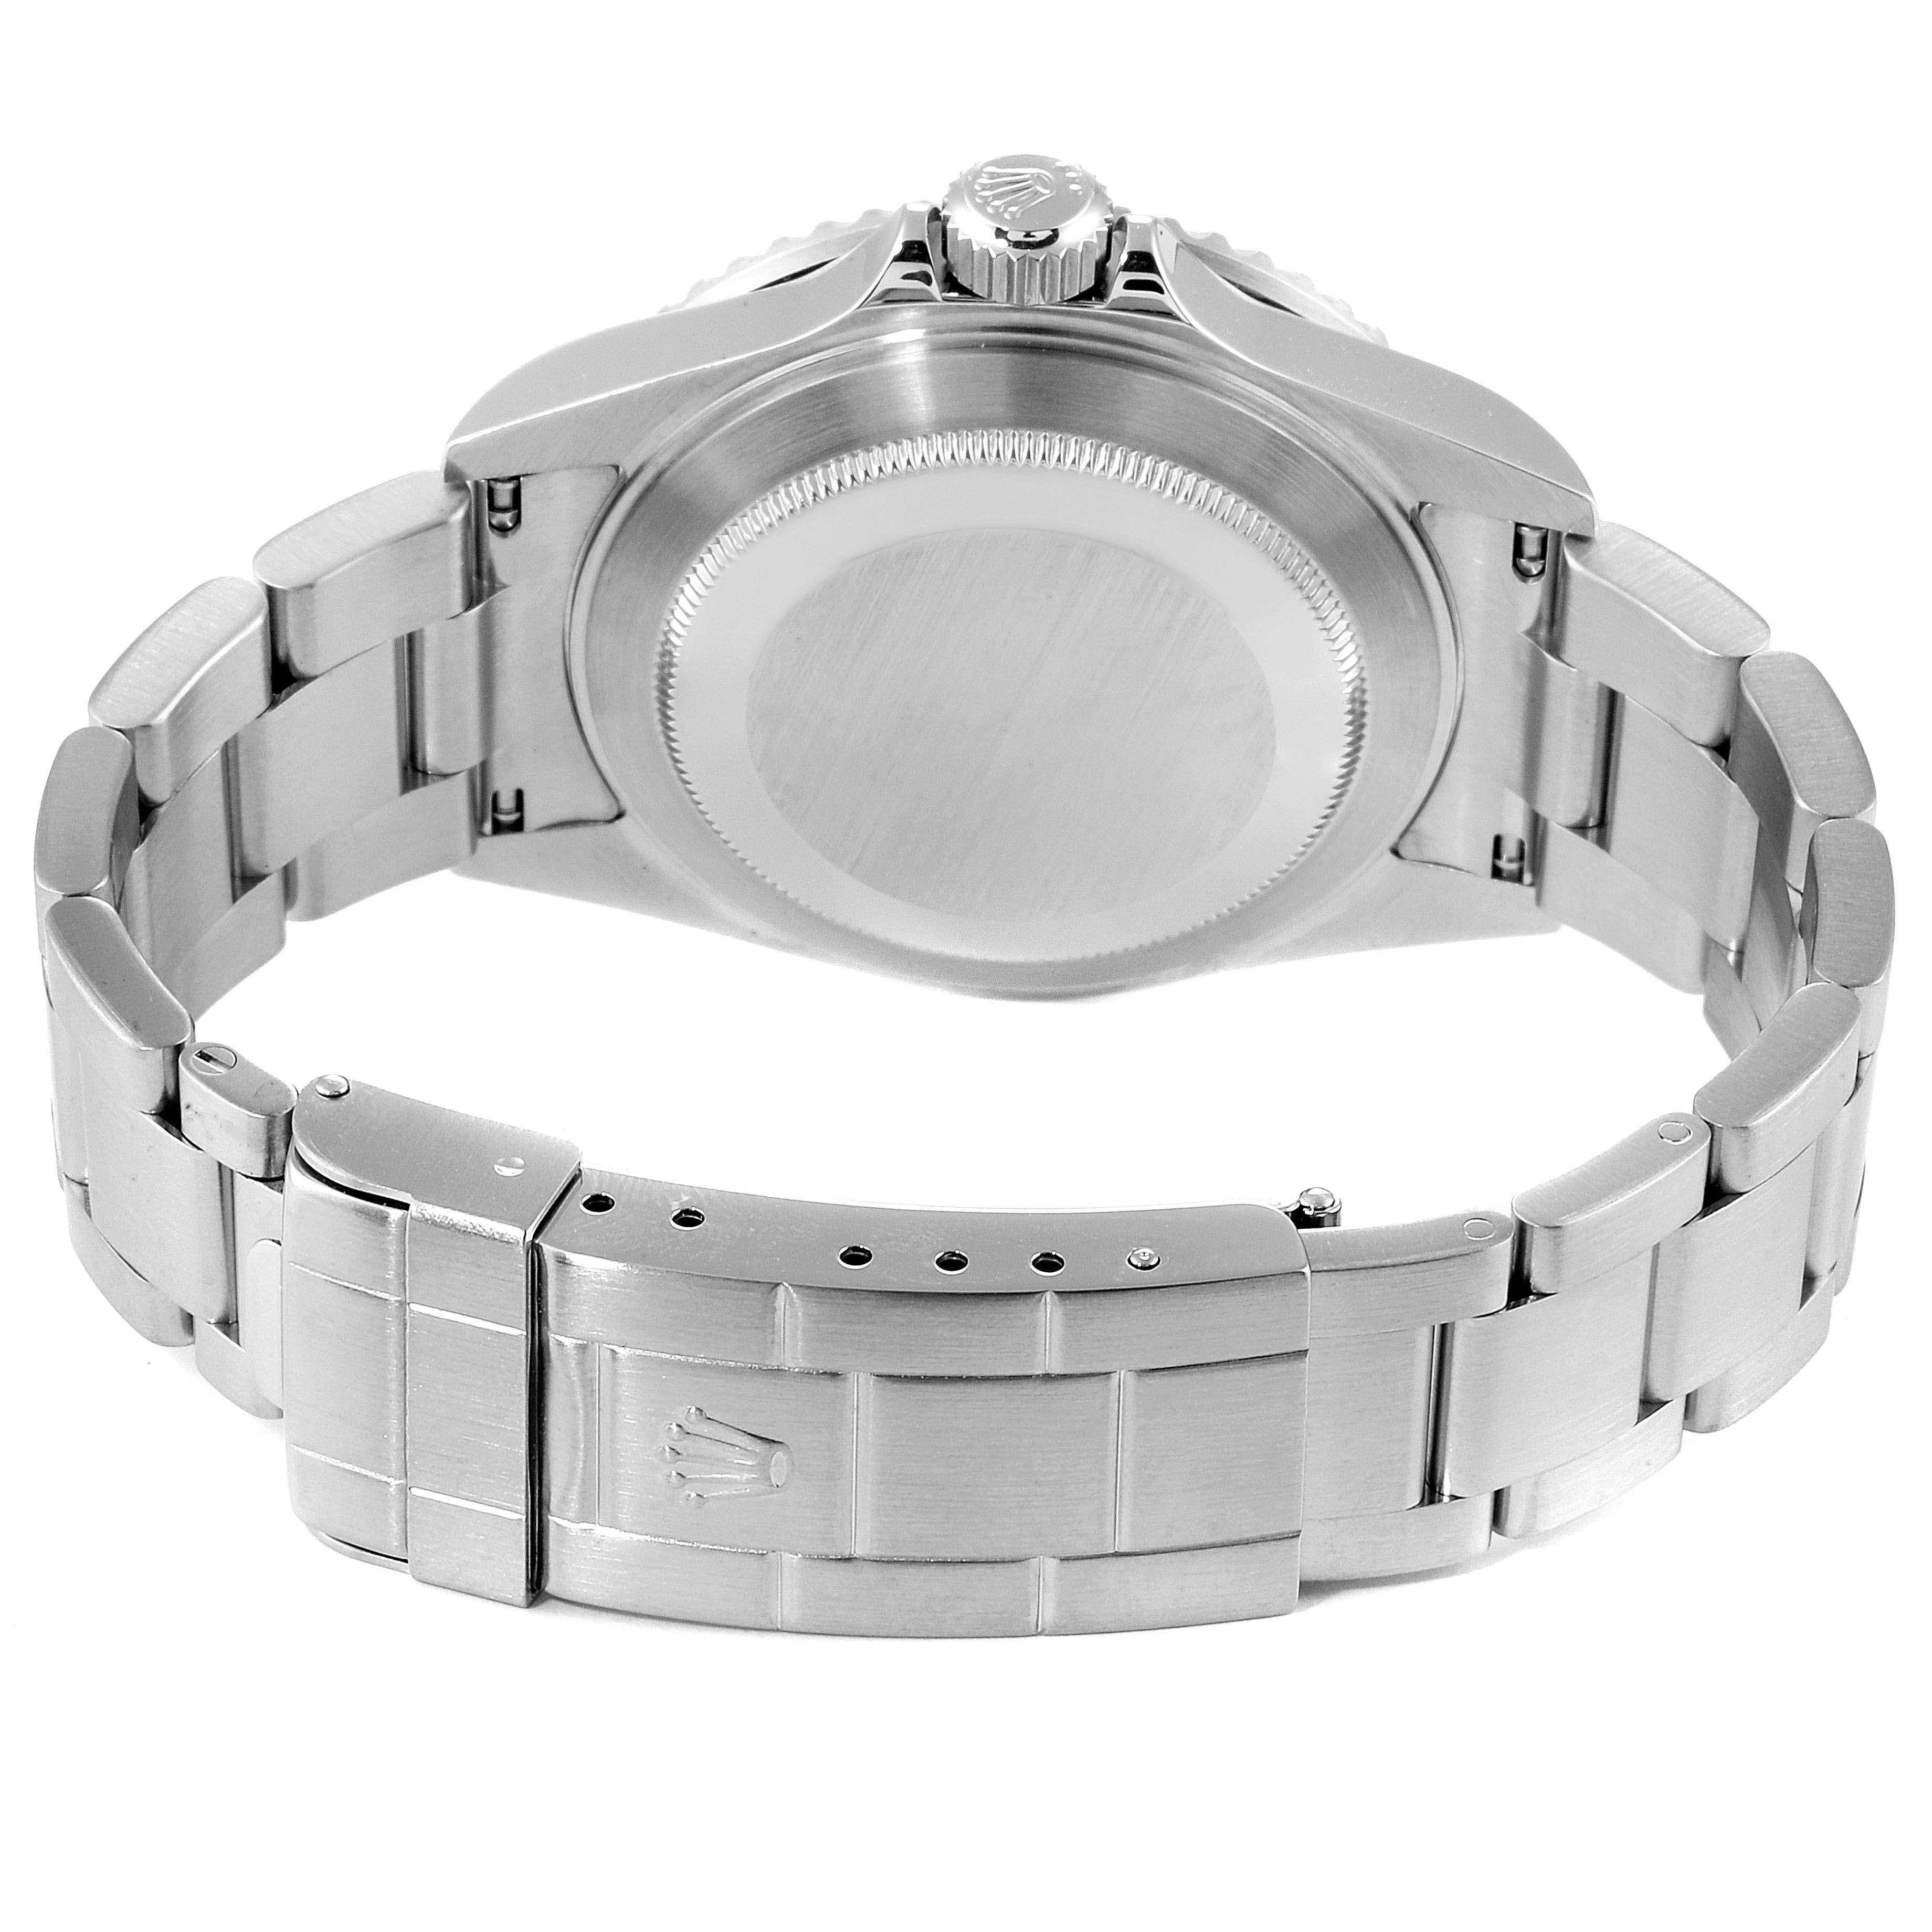 Rolex Submariner Date Stainless Steel Men's Watch 16610 Box Card 6